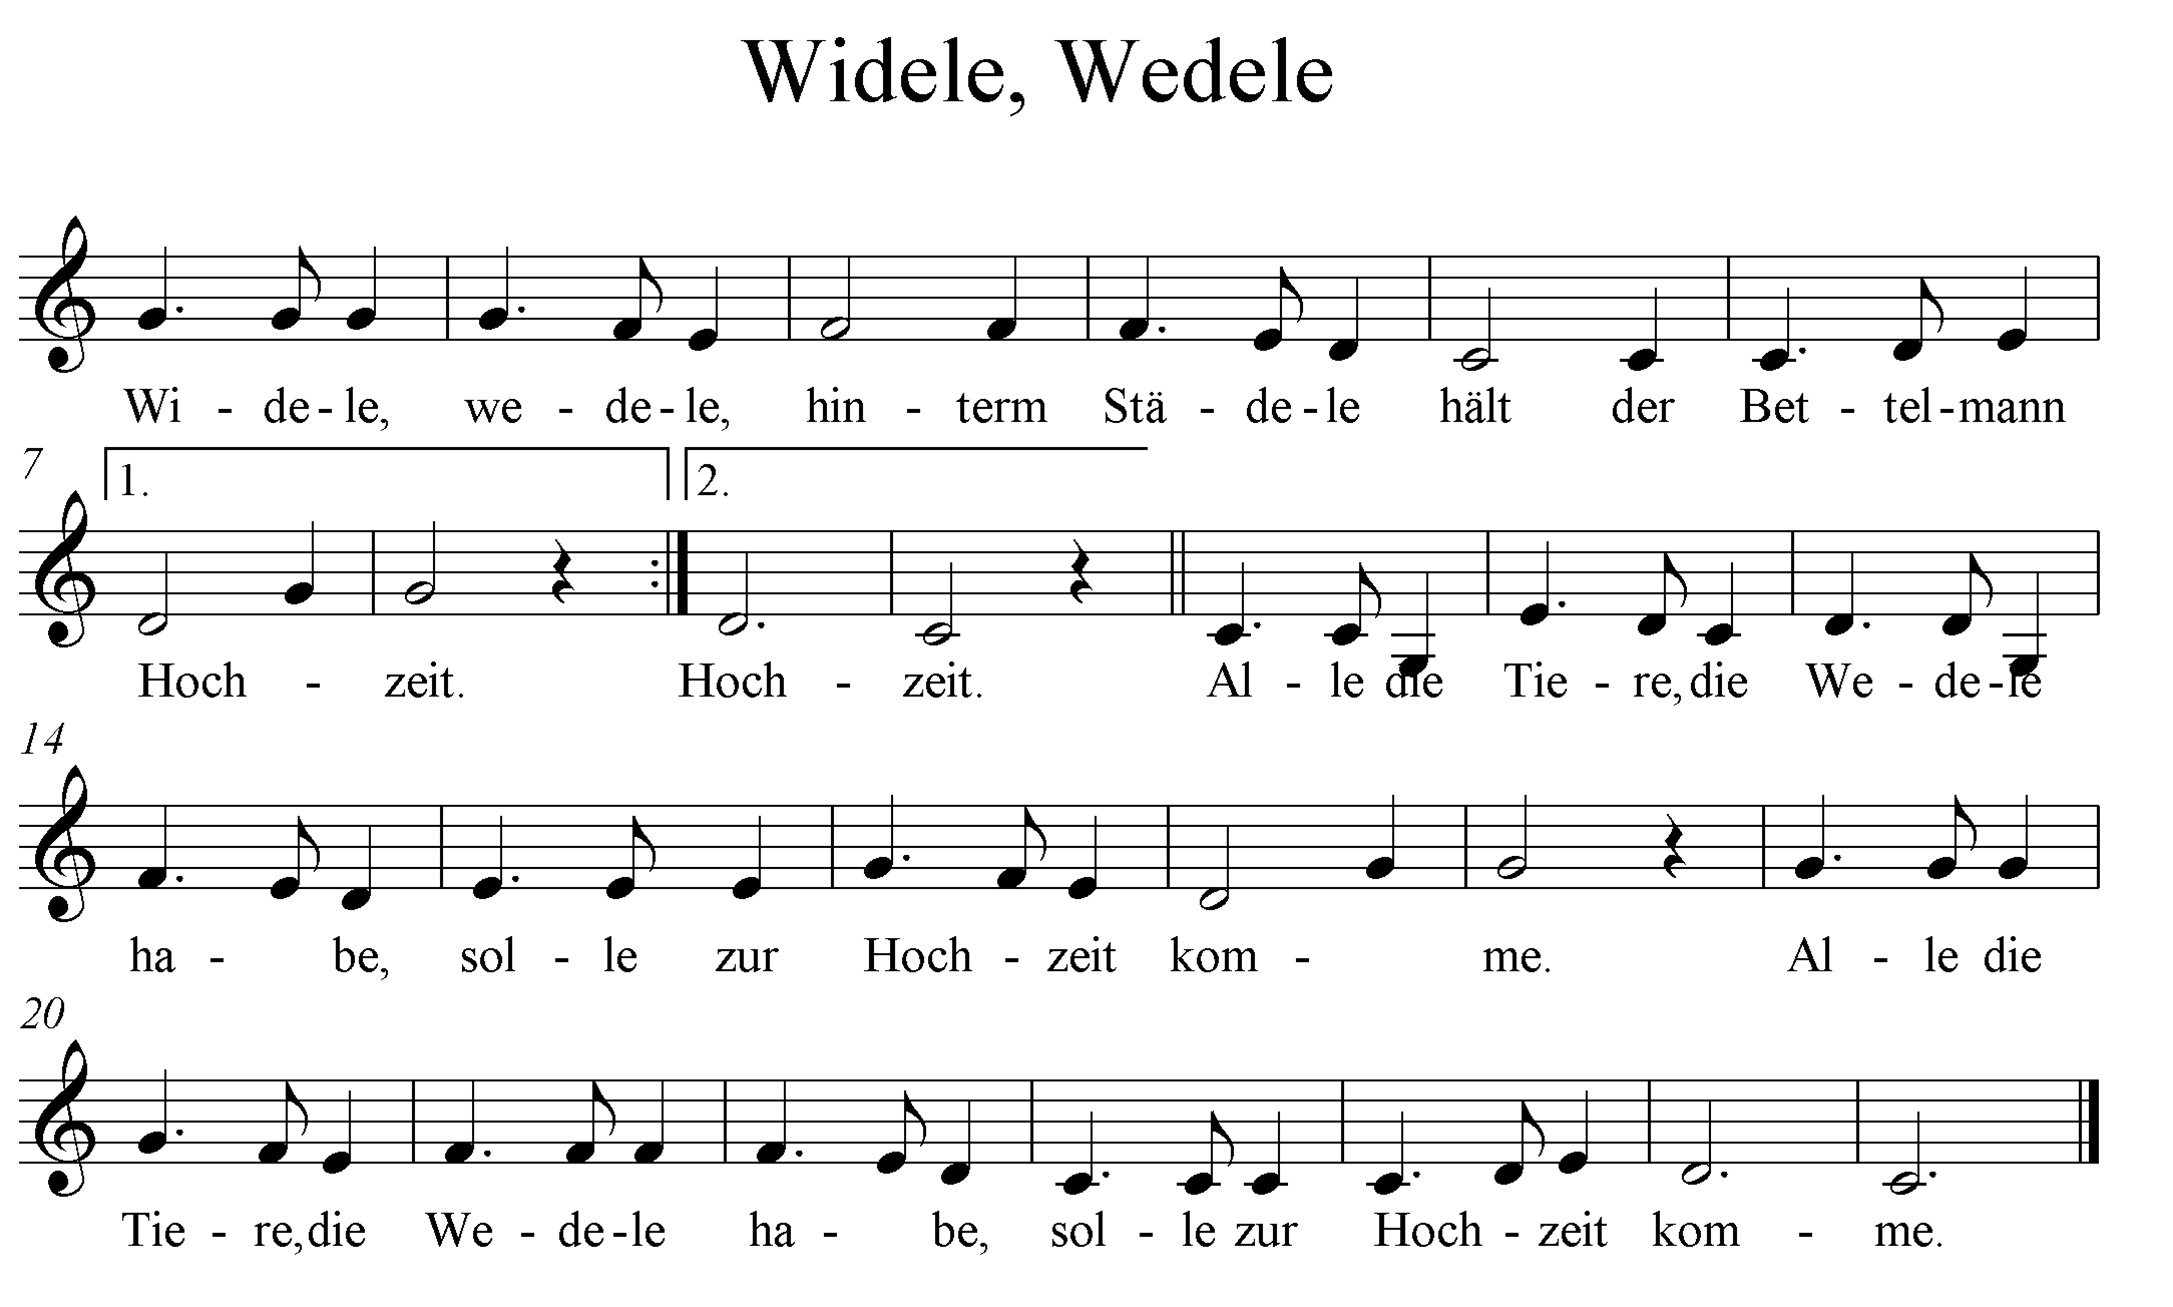 Widele wedele